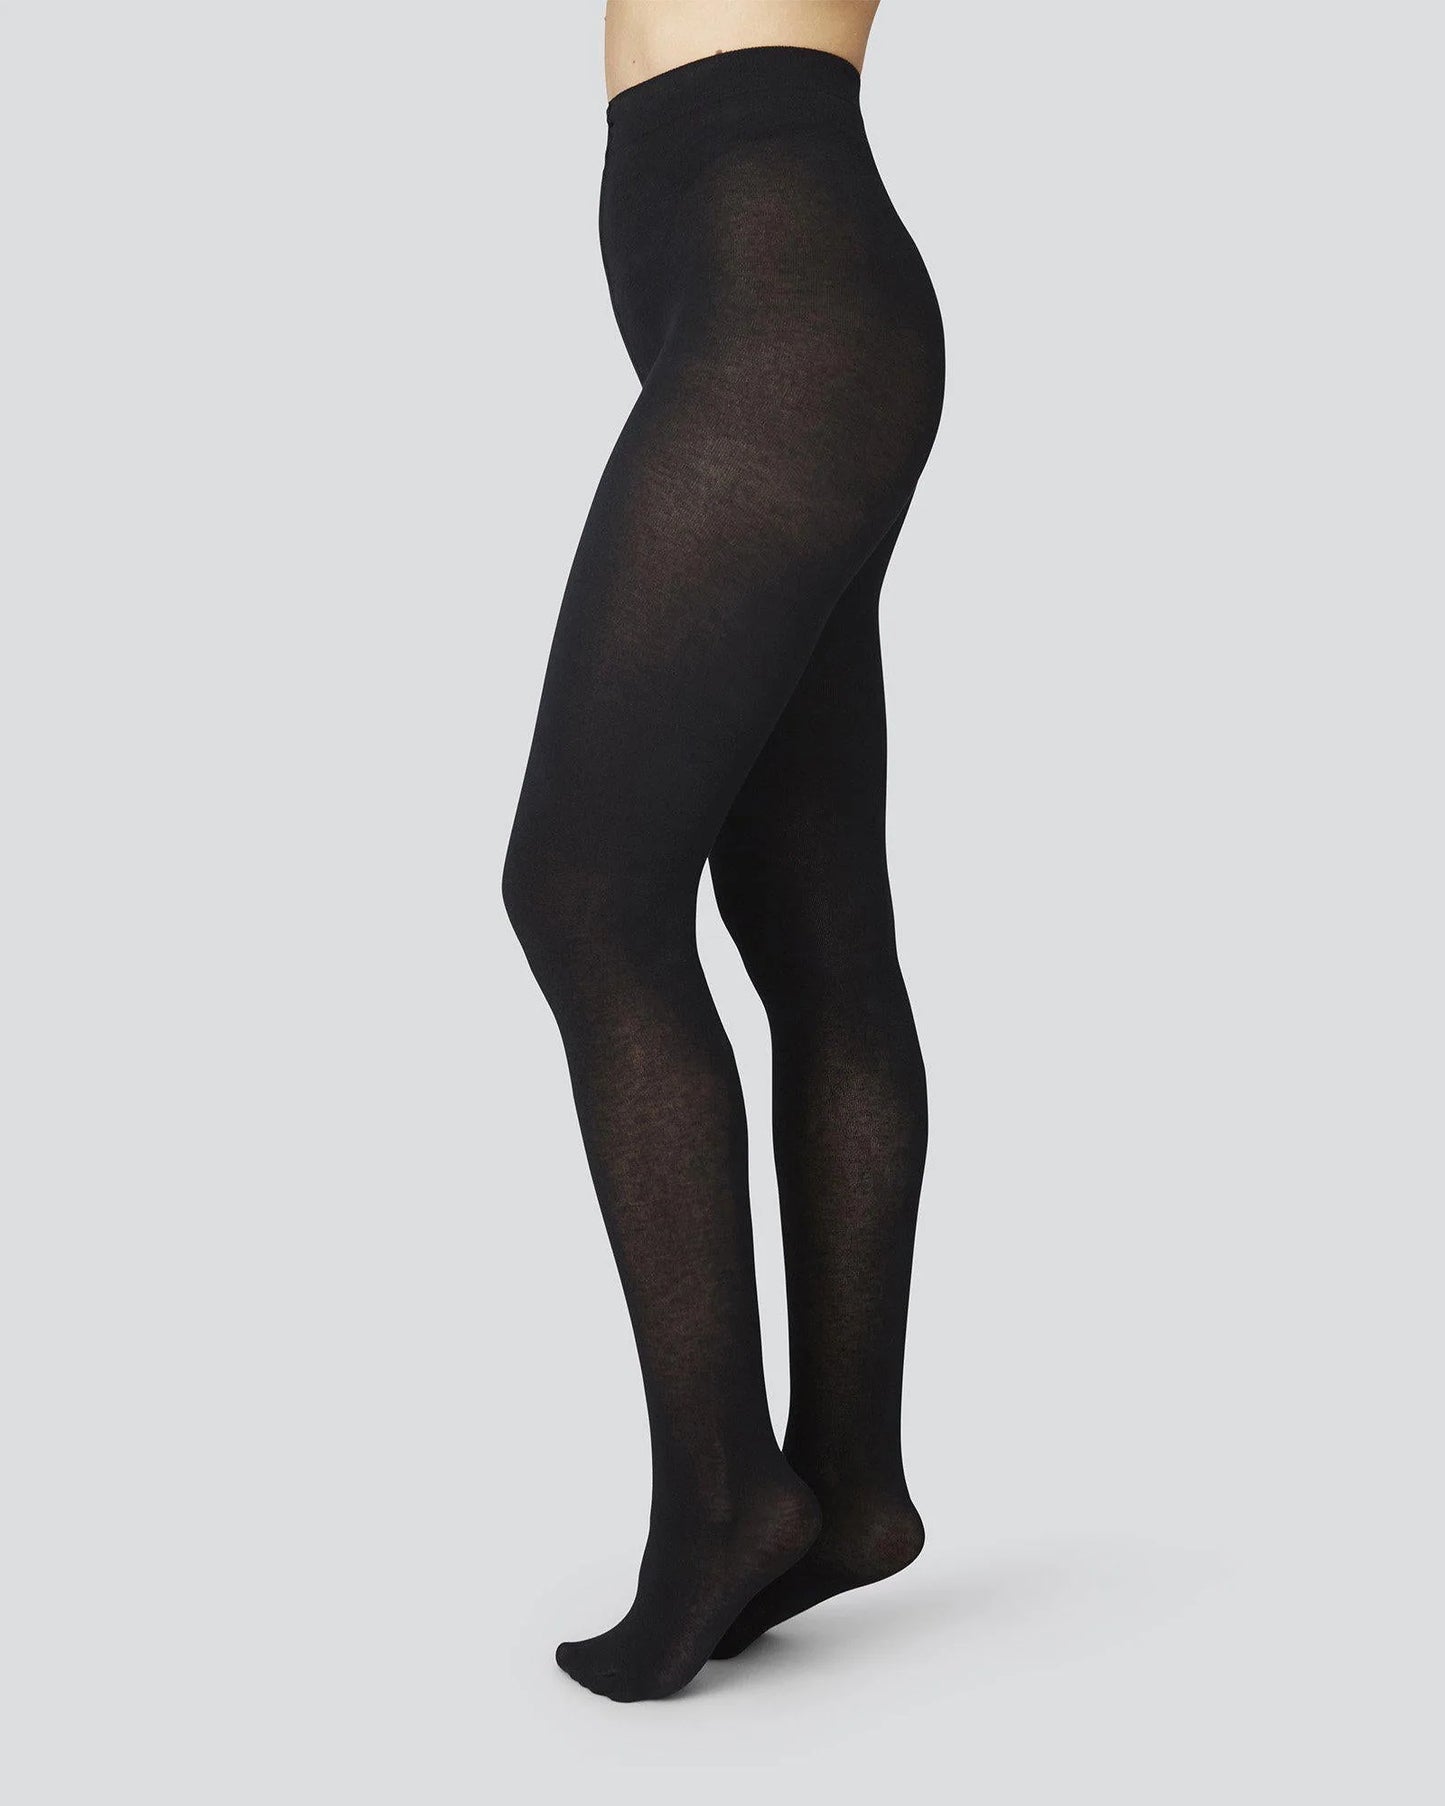 Swedish Stockings, Alica Cashmere Tights Black